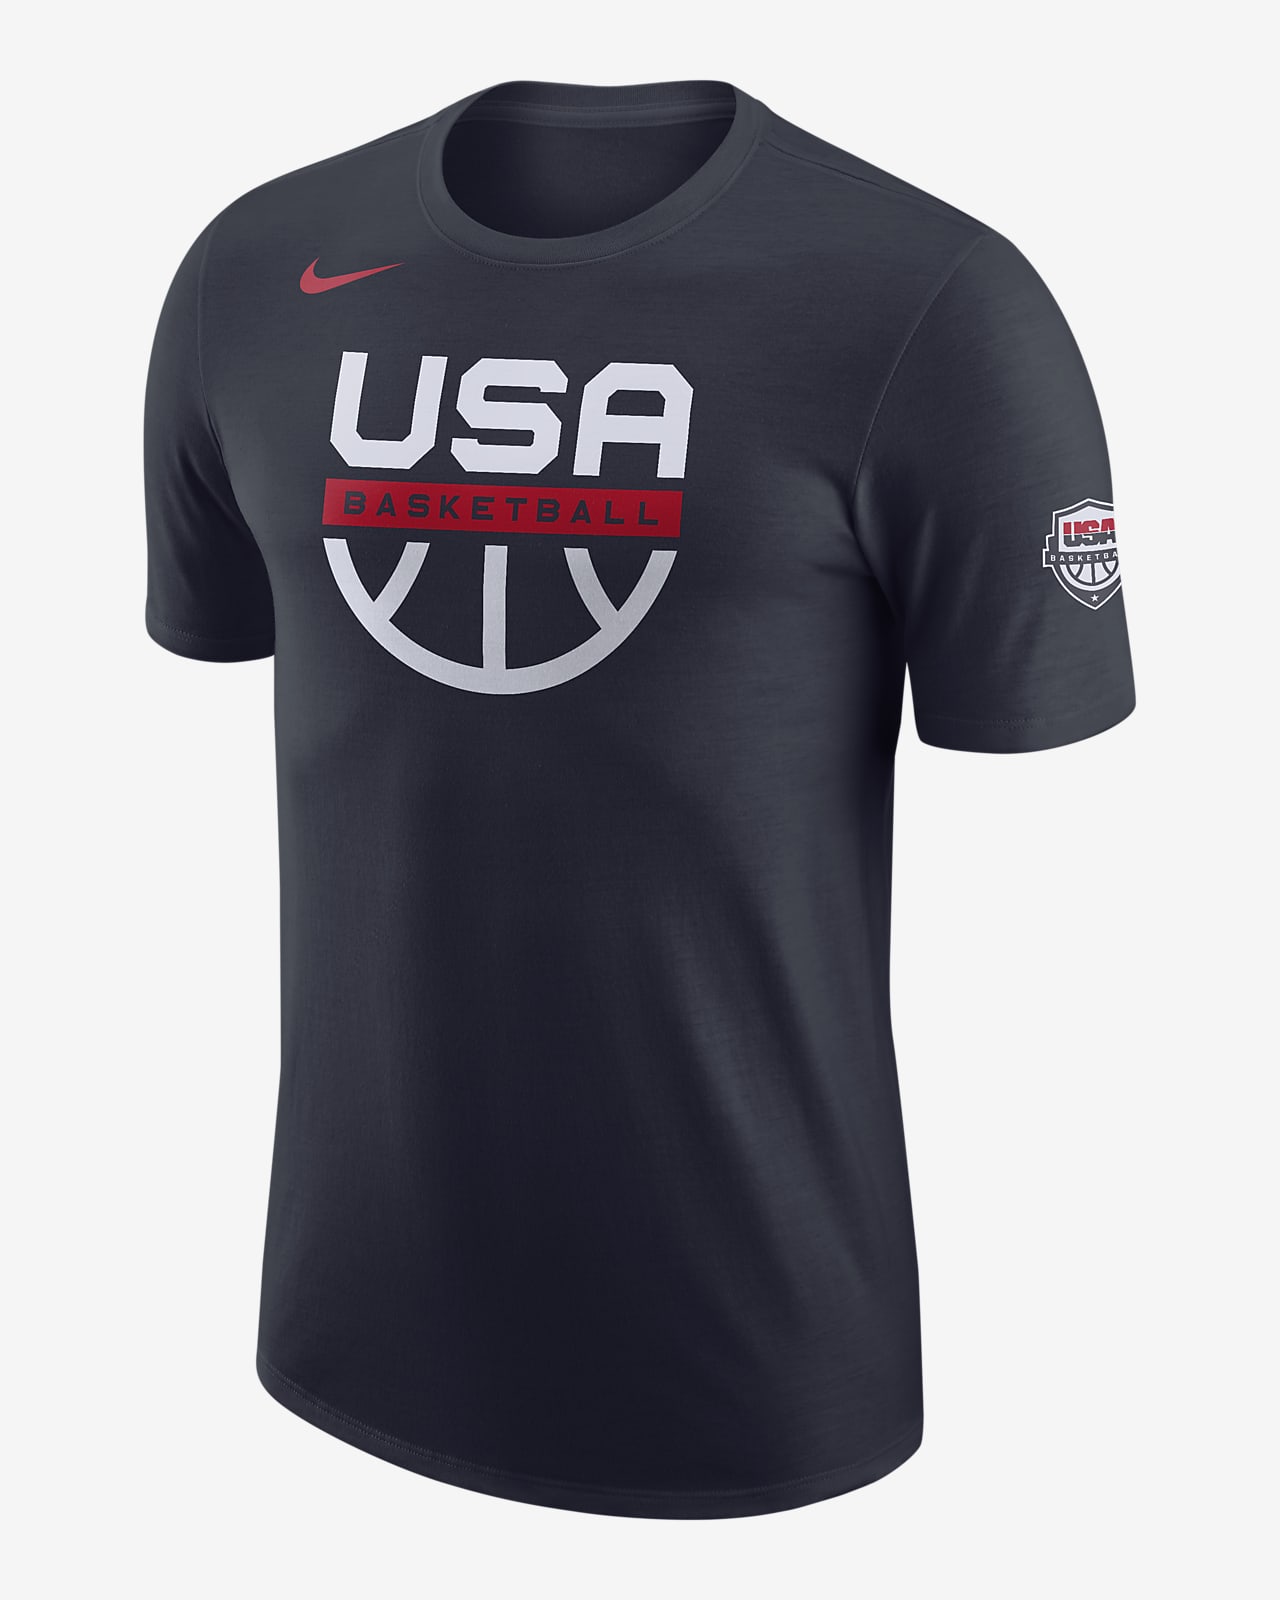 NIKE公式】USAB メンズ ナイキ Dri-FIT バスケットボール プラクティス Tシャツ.オンラインストア (通販サイト)